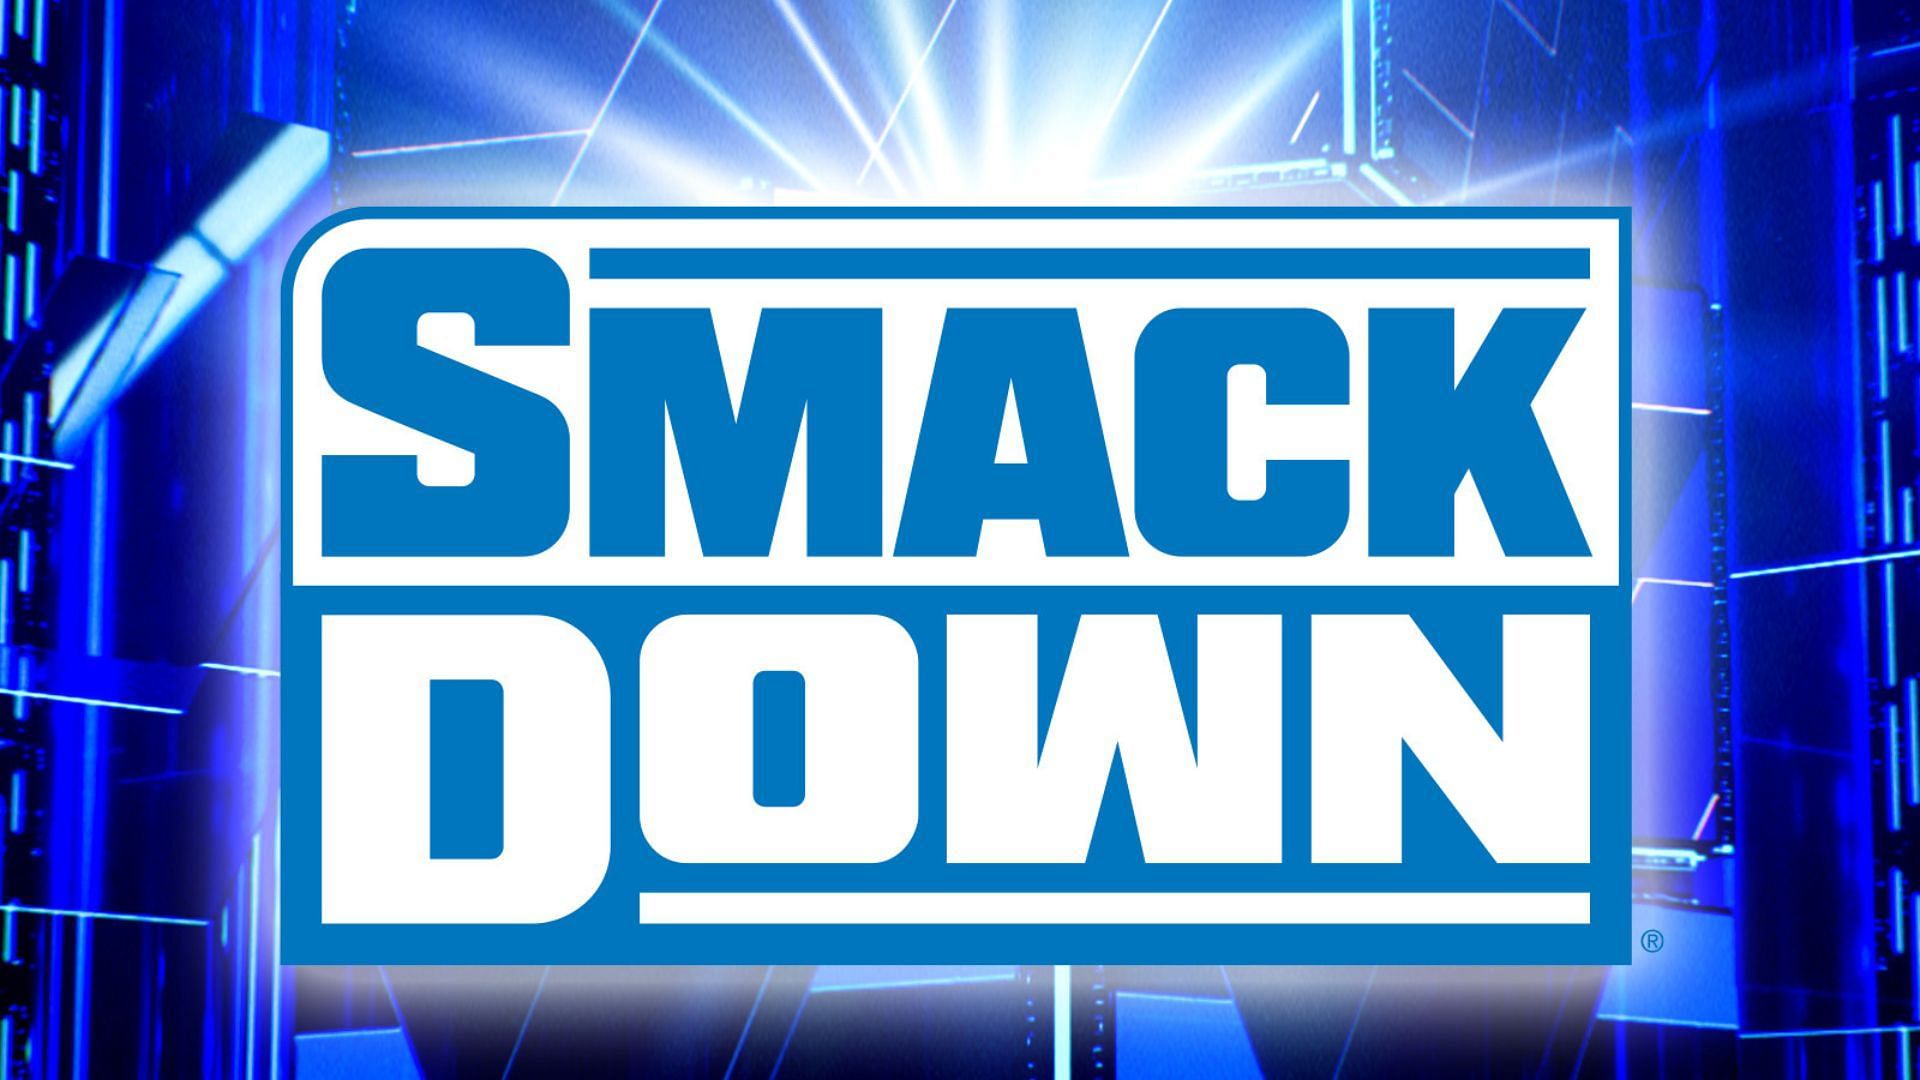 WWE SmackDown is the second longest-running weekly program!